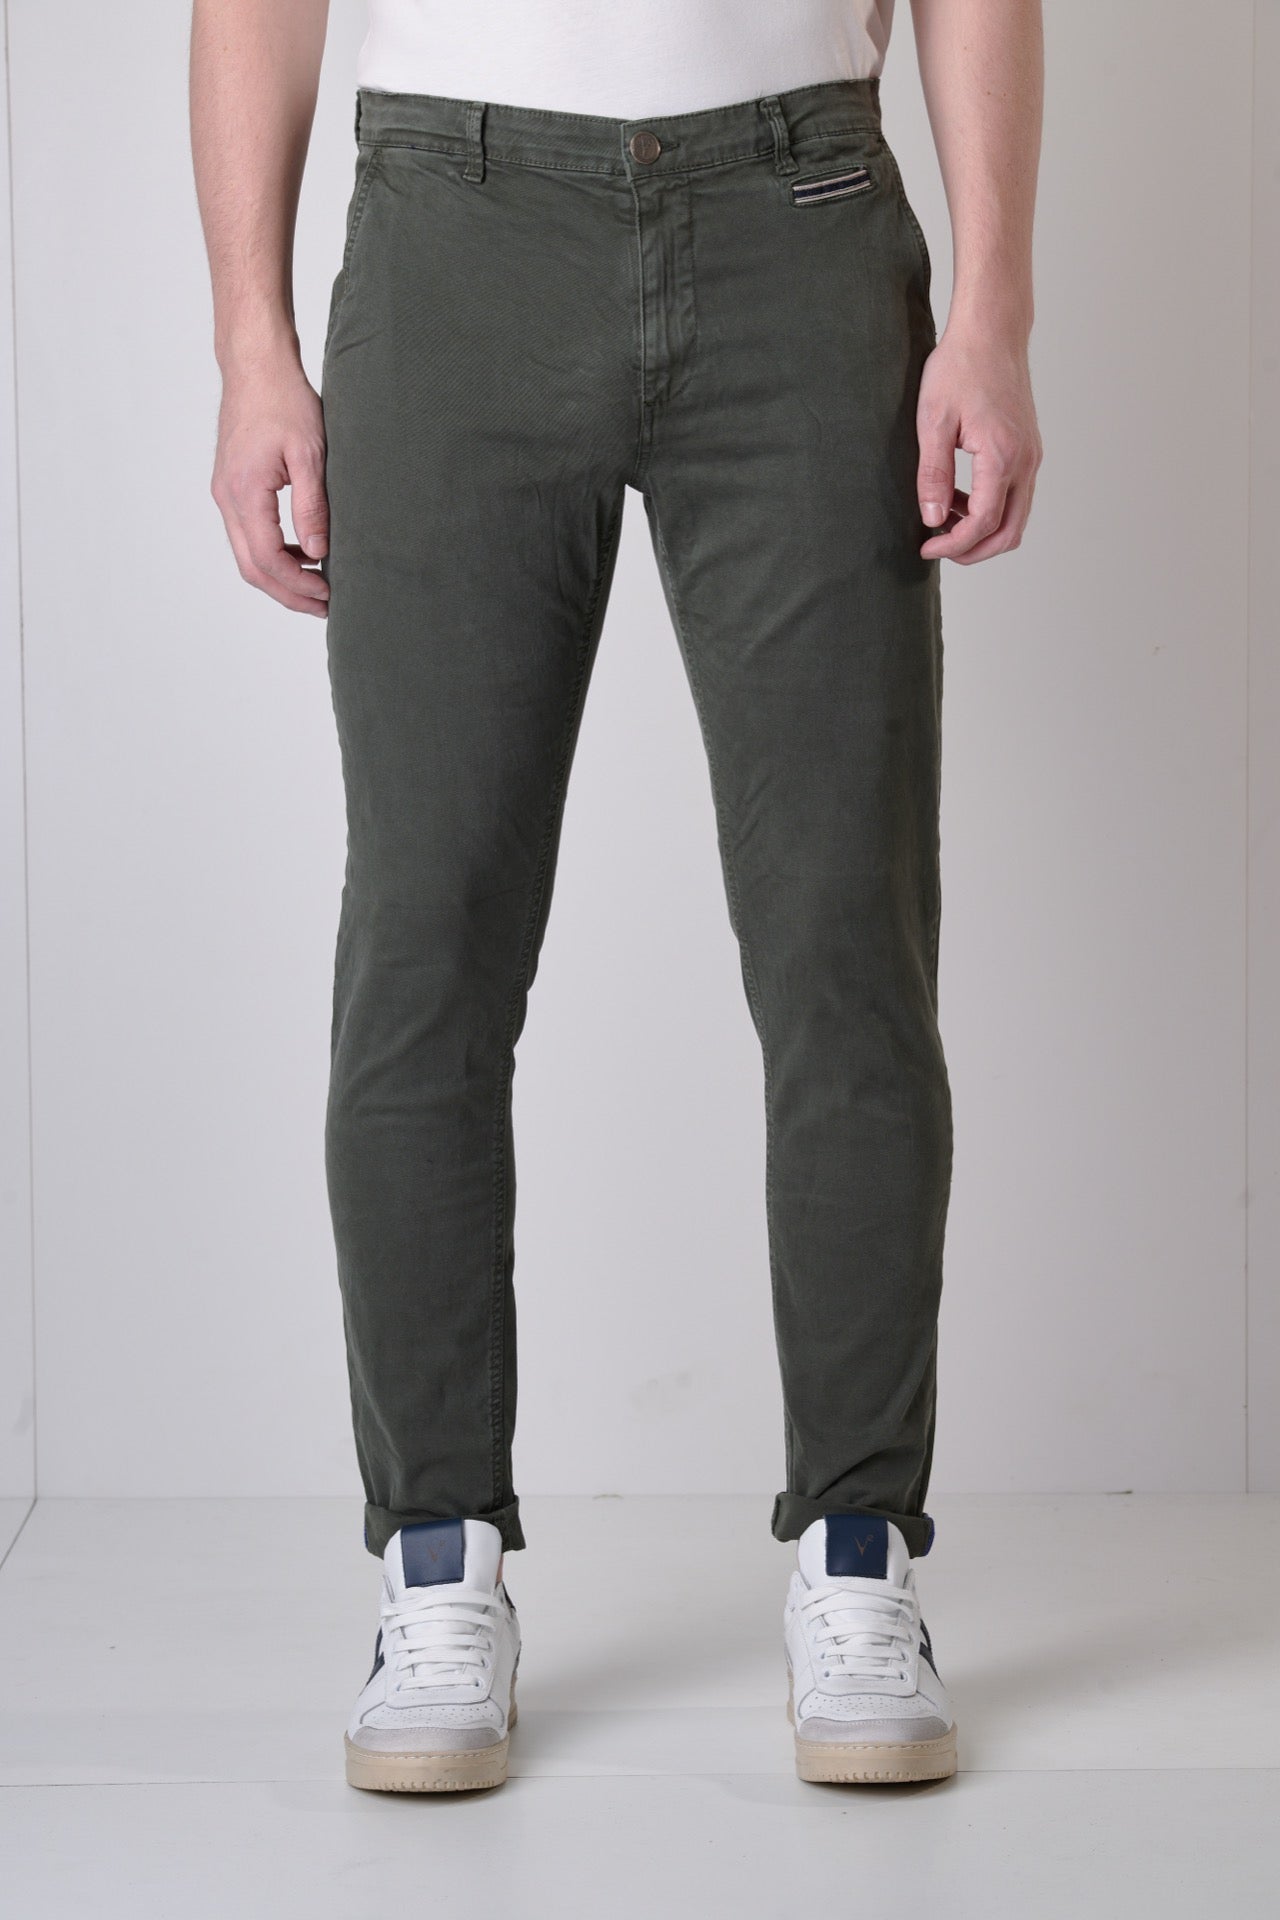 ROMA - Military Green Chino Trousers